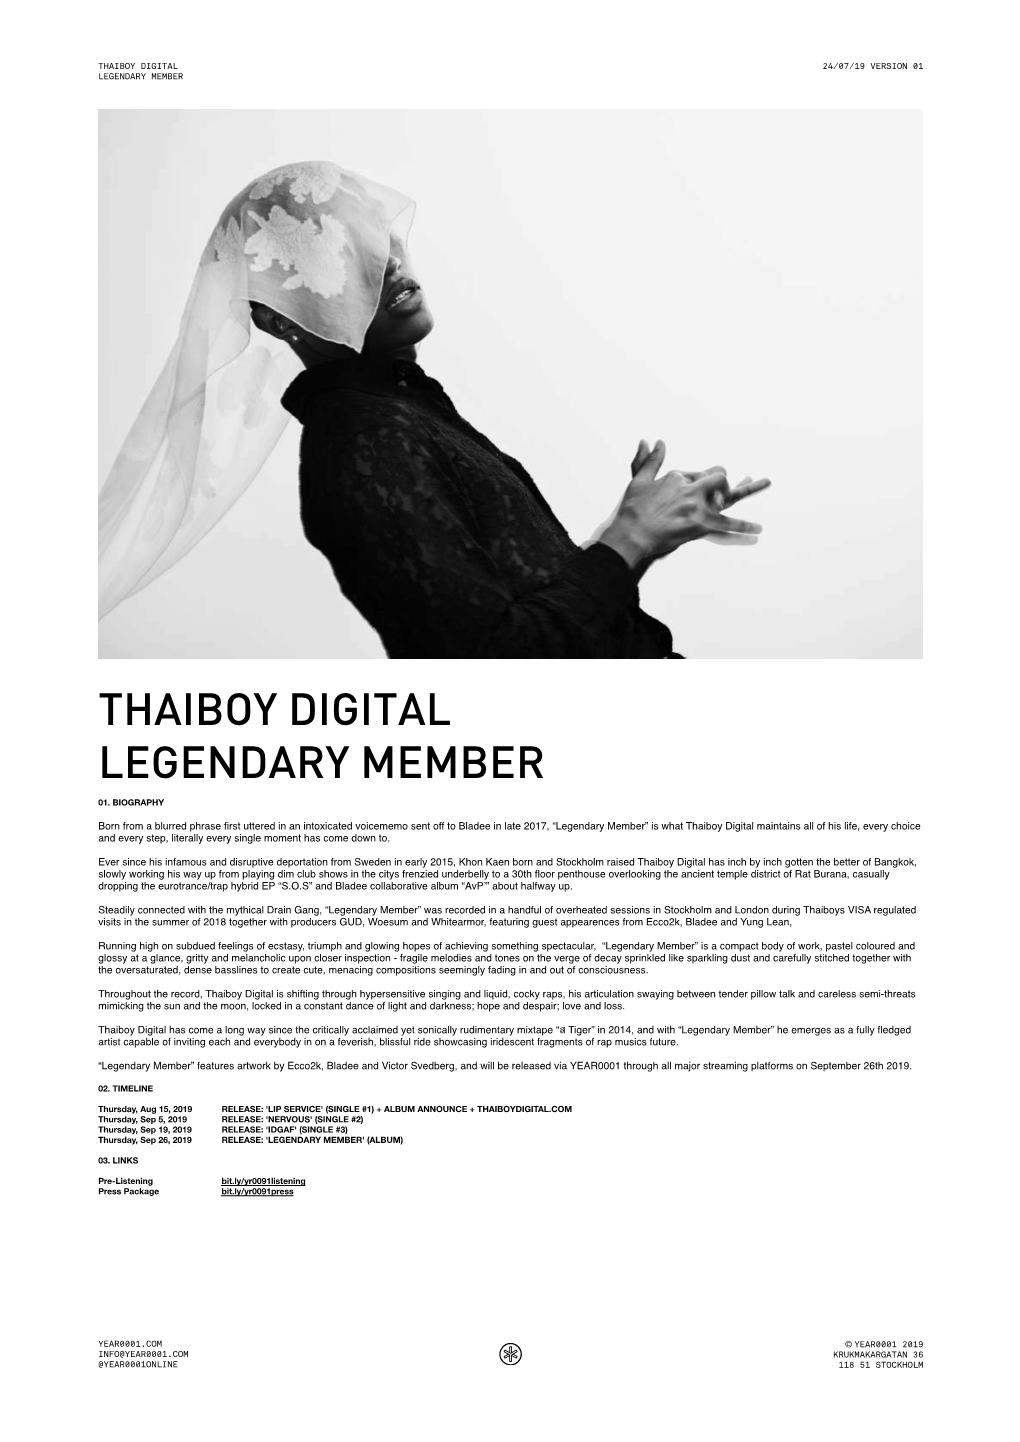 Thaiboy Digital Legendary Member